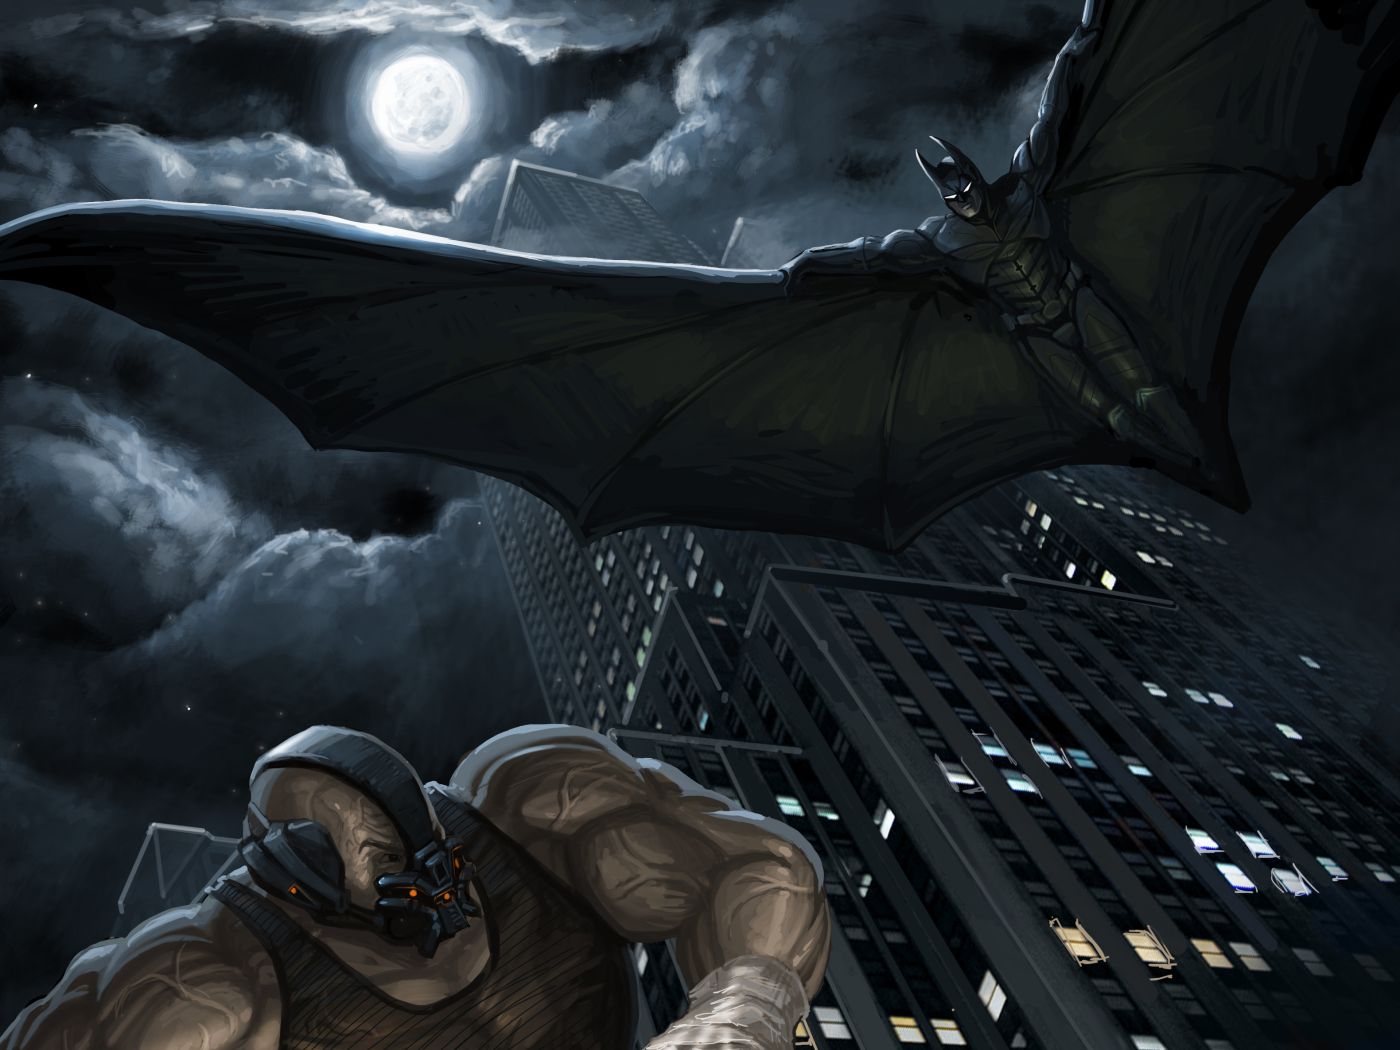 Batman vs Bane 1400x1050 Resolution Wallpaper, HD Superheroes 4K Wallpaper, Image, Photo and Background